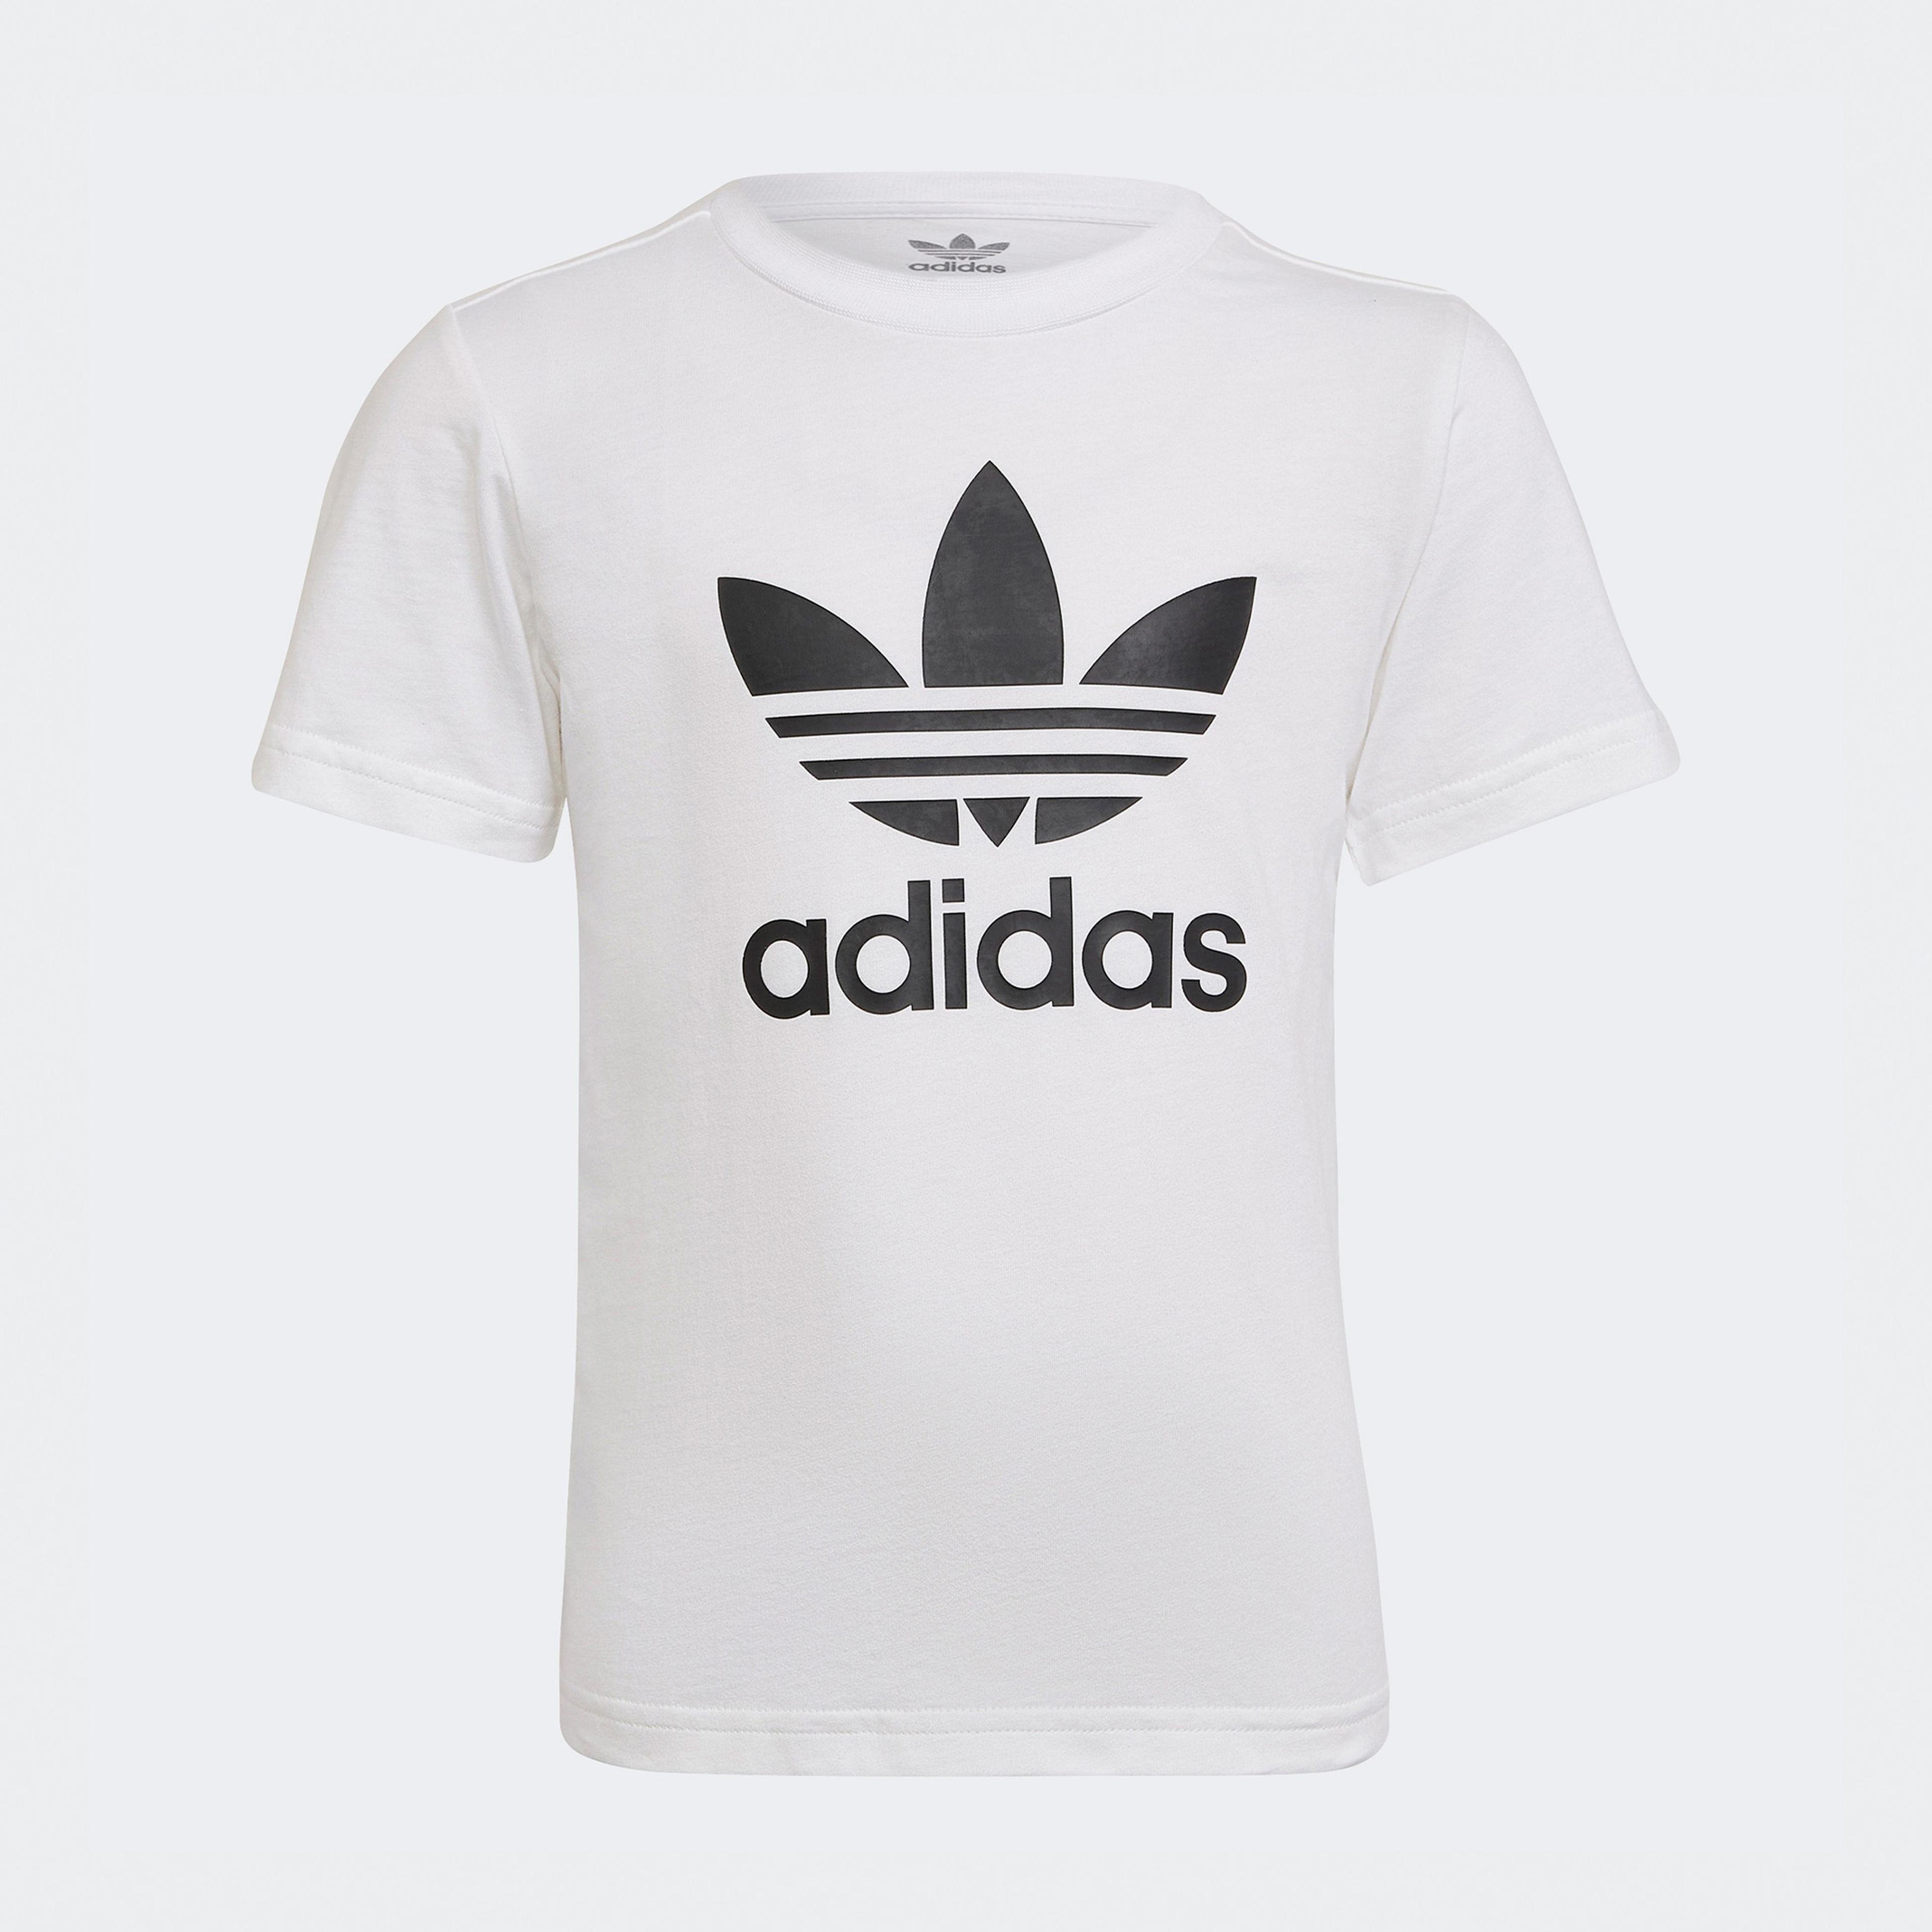 adidas Çocuk Beyaz Şort / T-Shirt Takımı